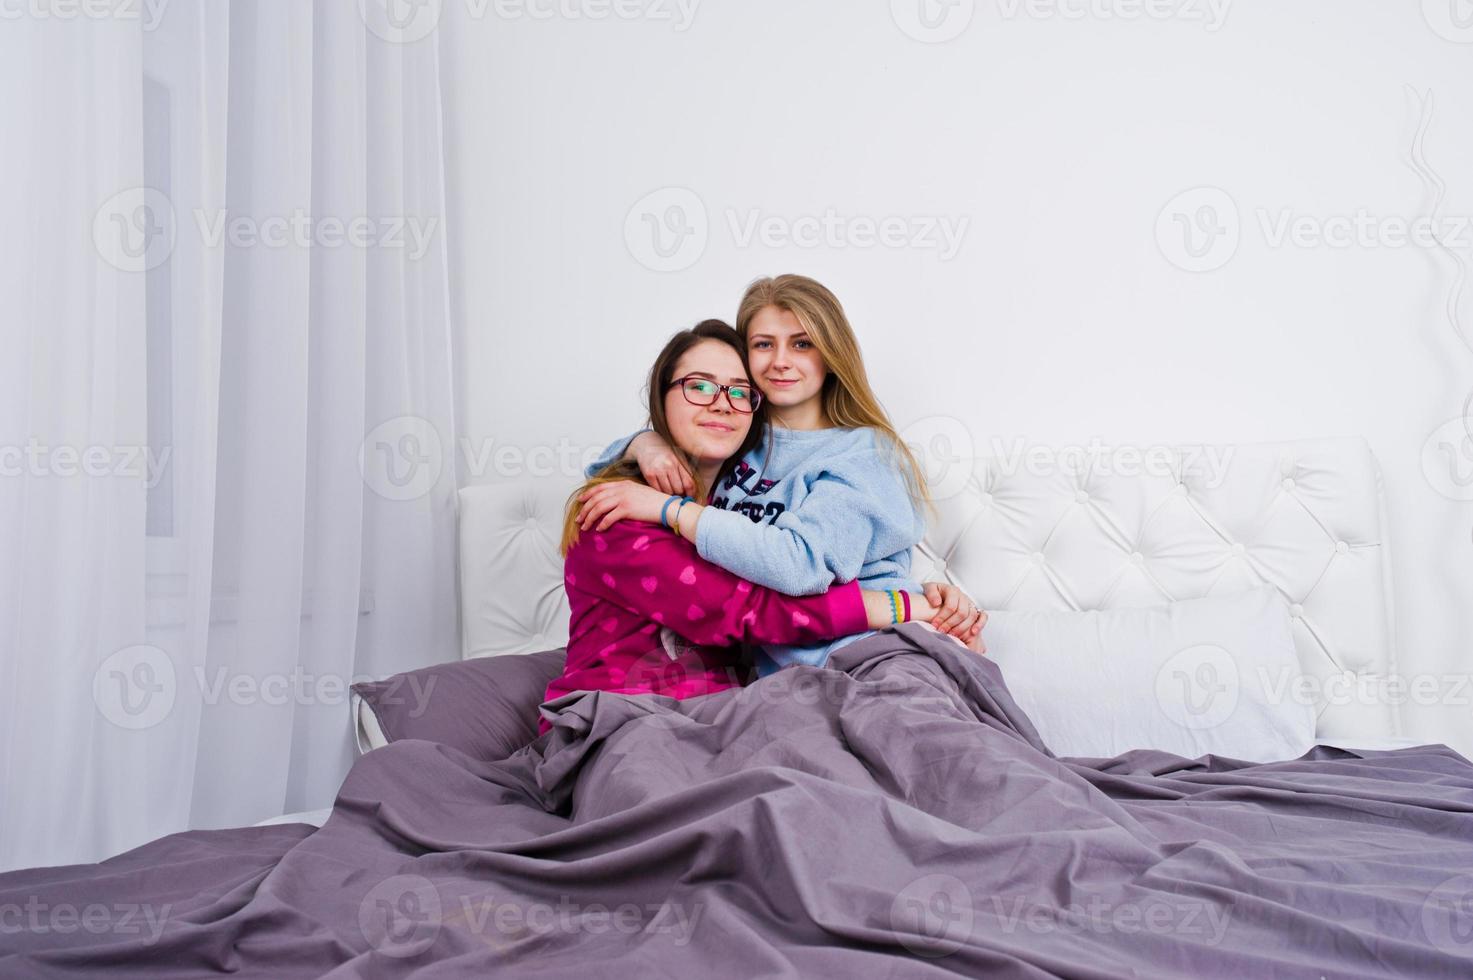 twee vrienden meisjes in pyjama plezier op bed op kamer. foto